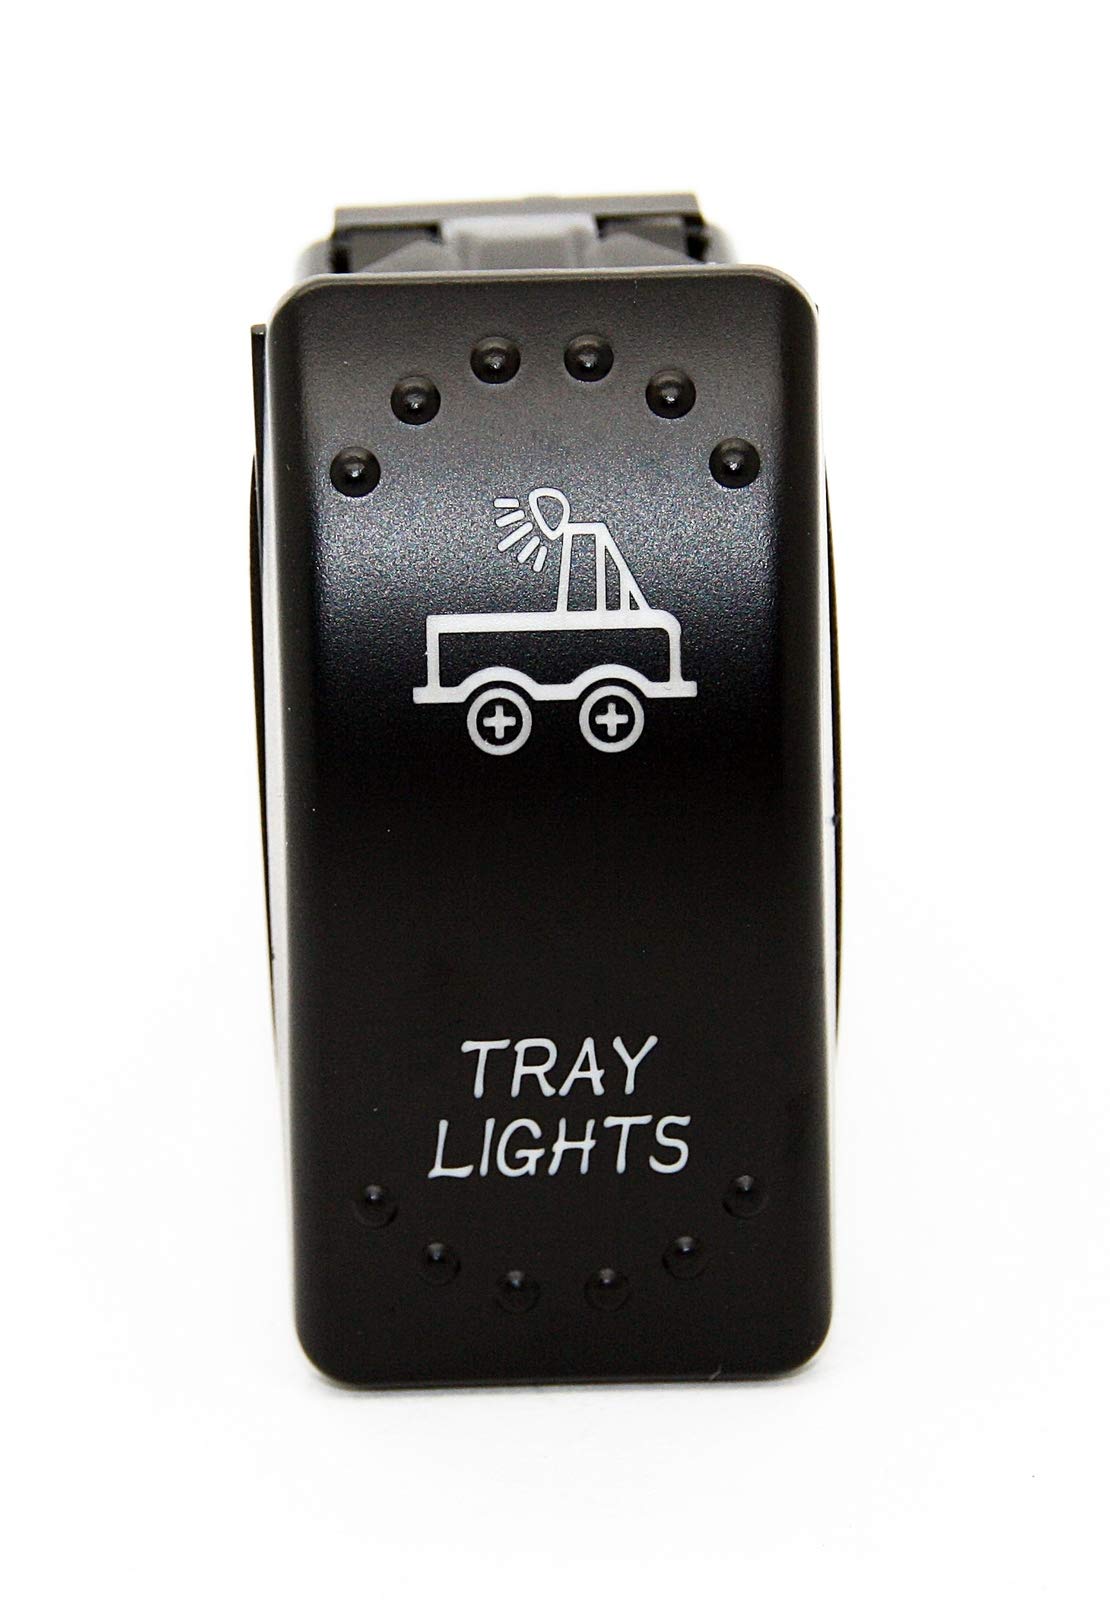 LED-Mafia Arbeitsscheinwerfer hinten Heck hintere Beleuchtung - Tray Lights JJ21 - Symbol Kippschalter Wippschalter Schalter Auto Boot KFZ LKW Licht 12V 24V von LED-Mafia